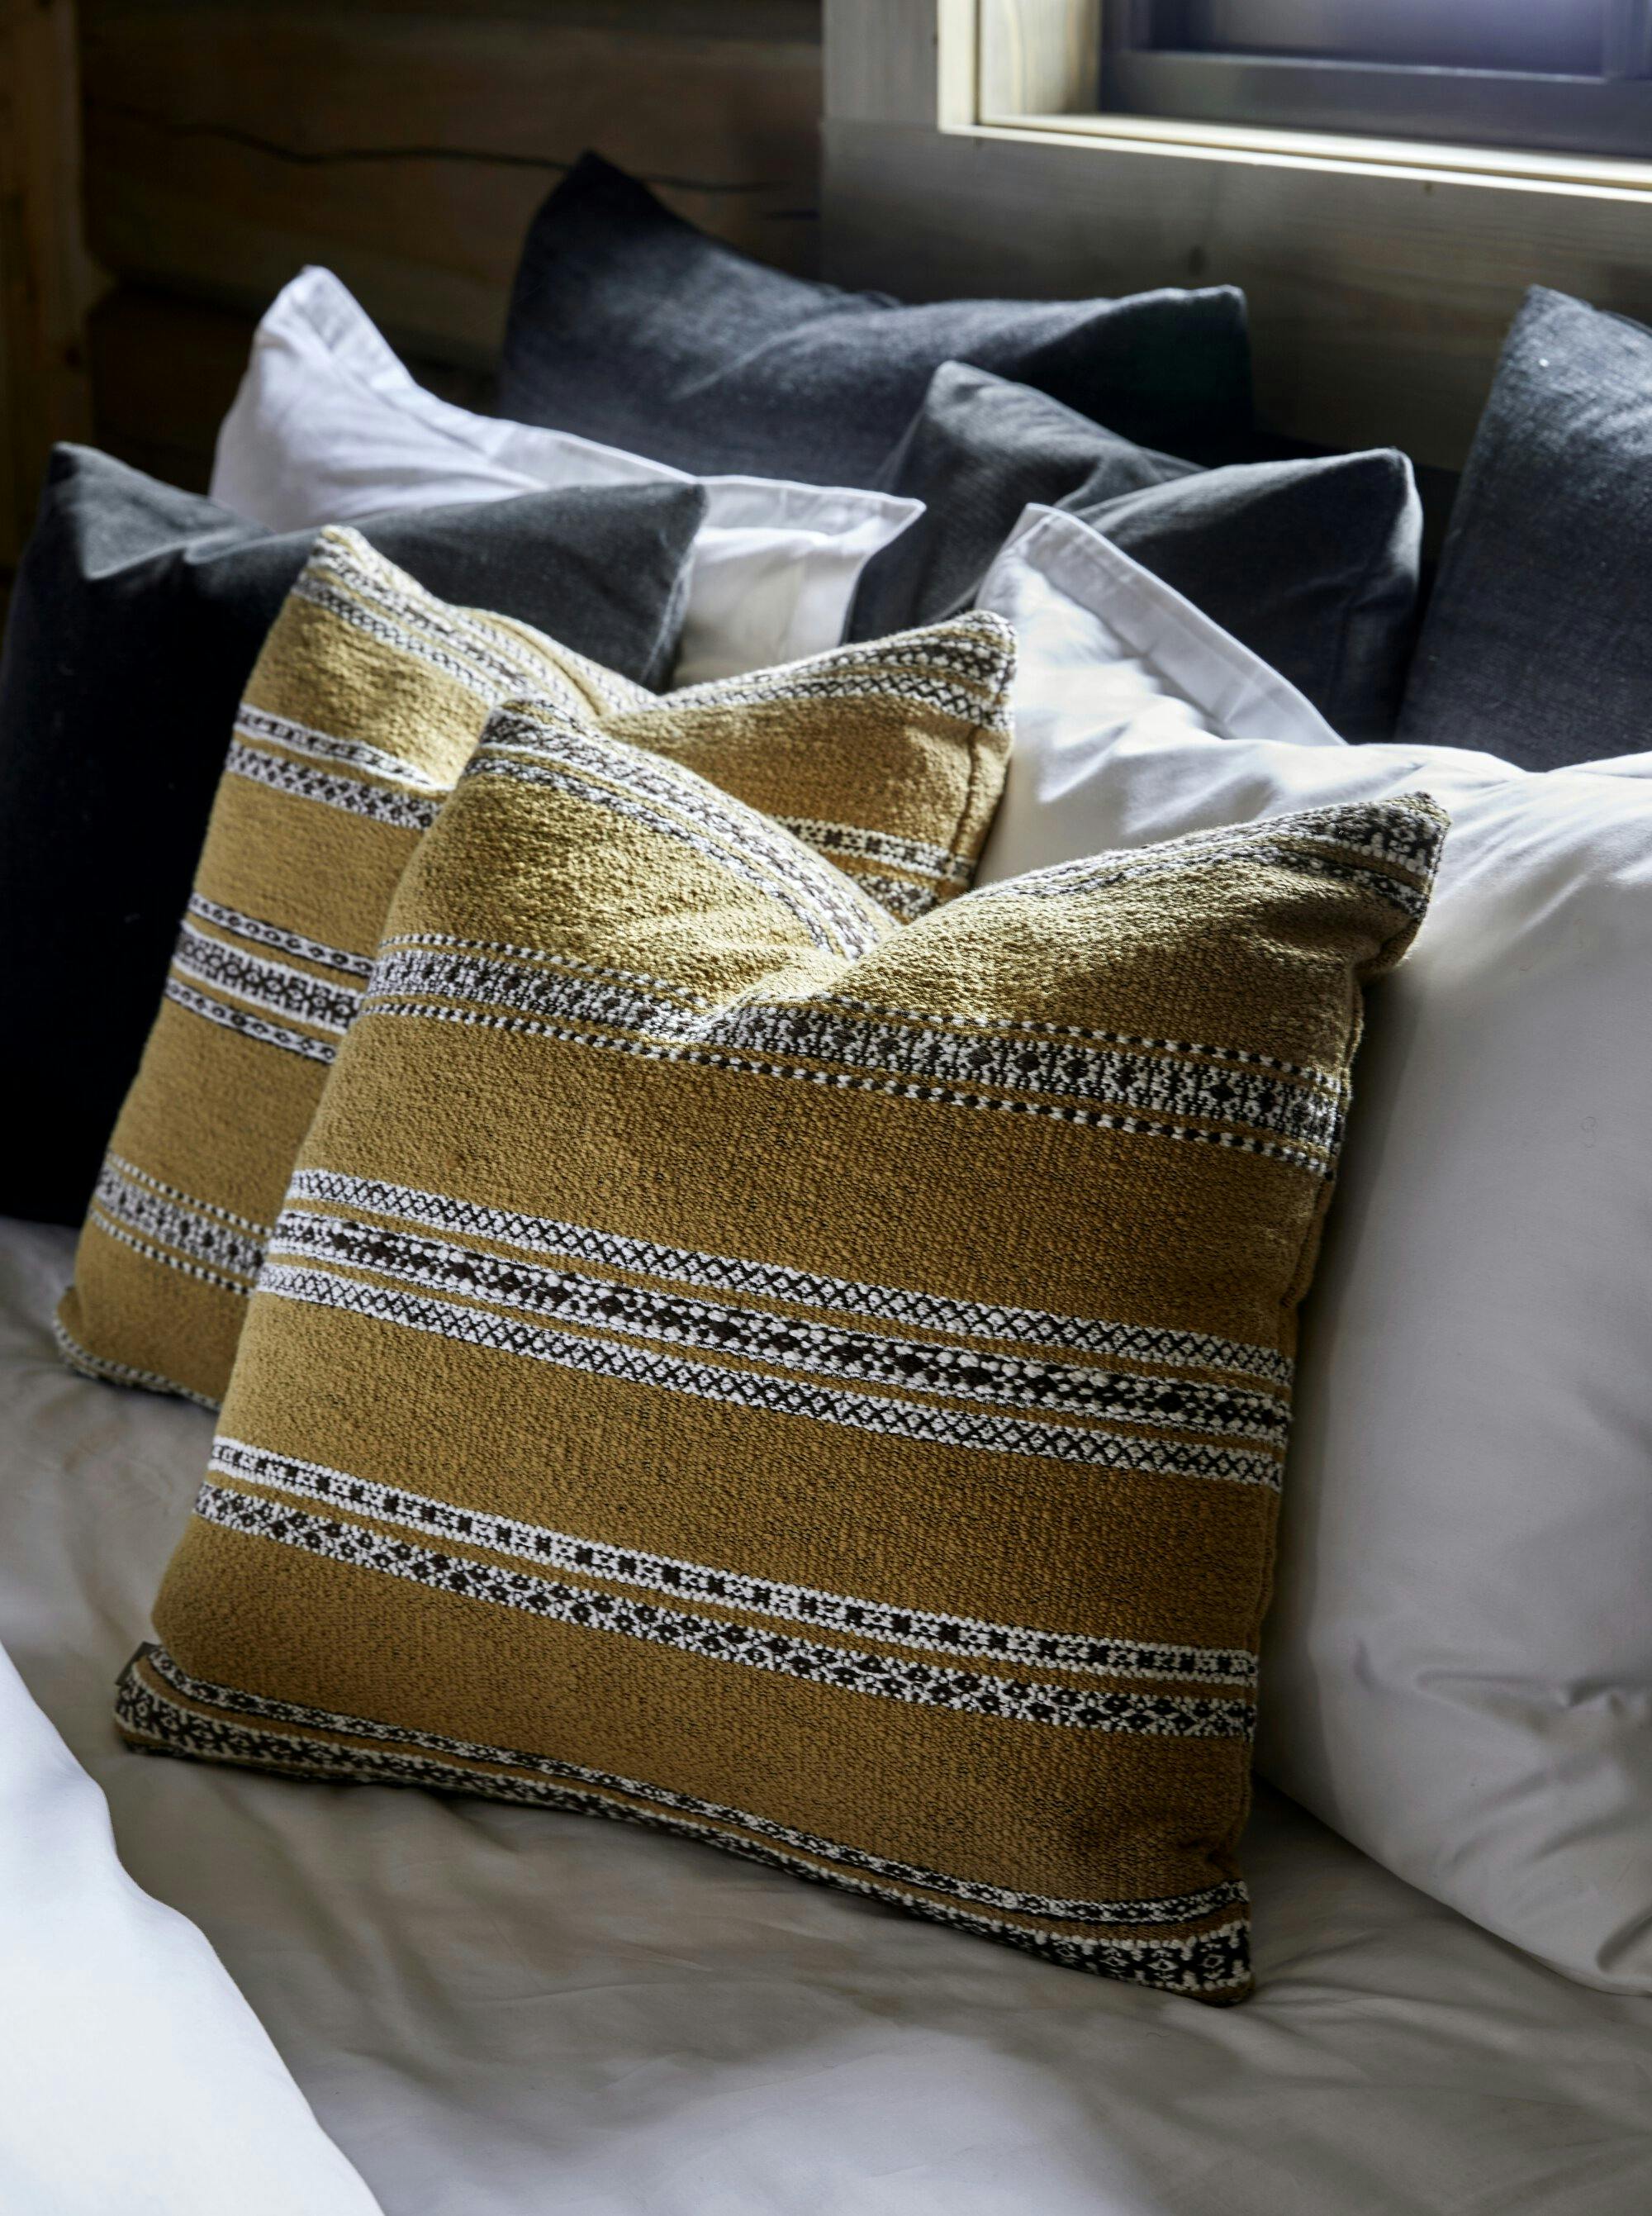 Morolava decorative pillow